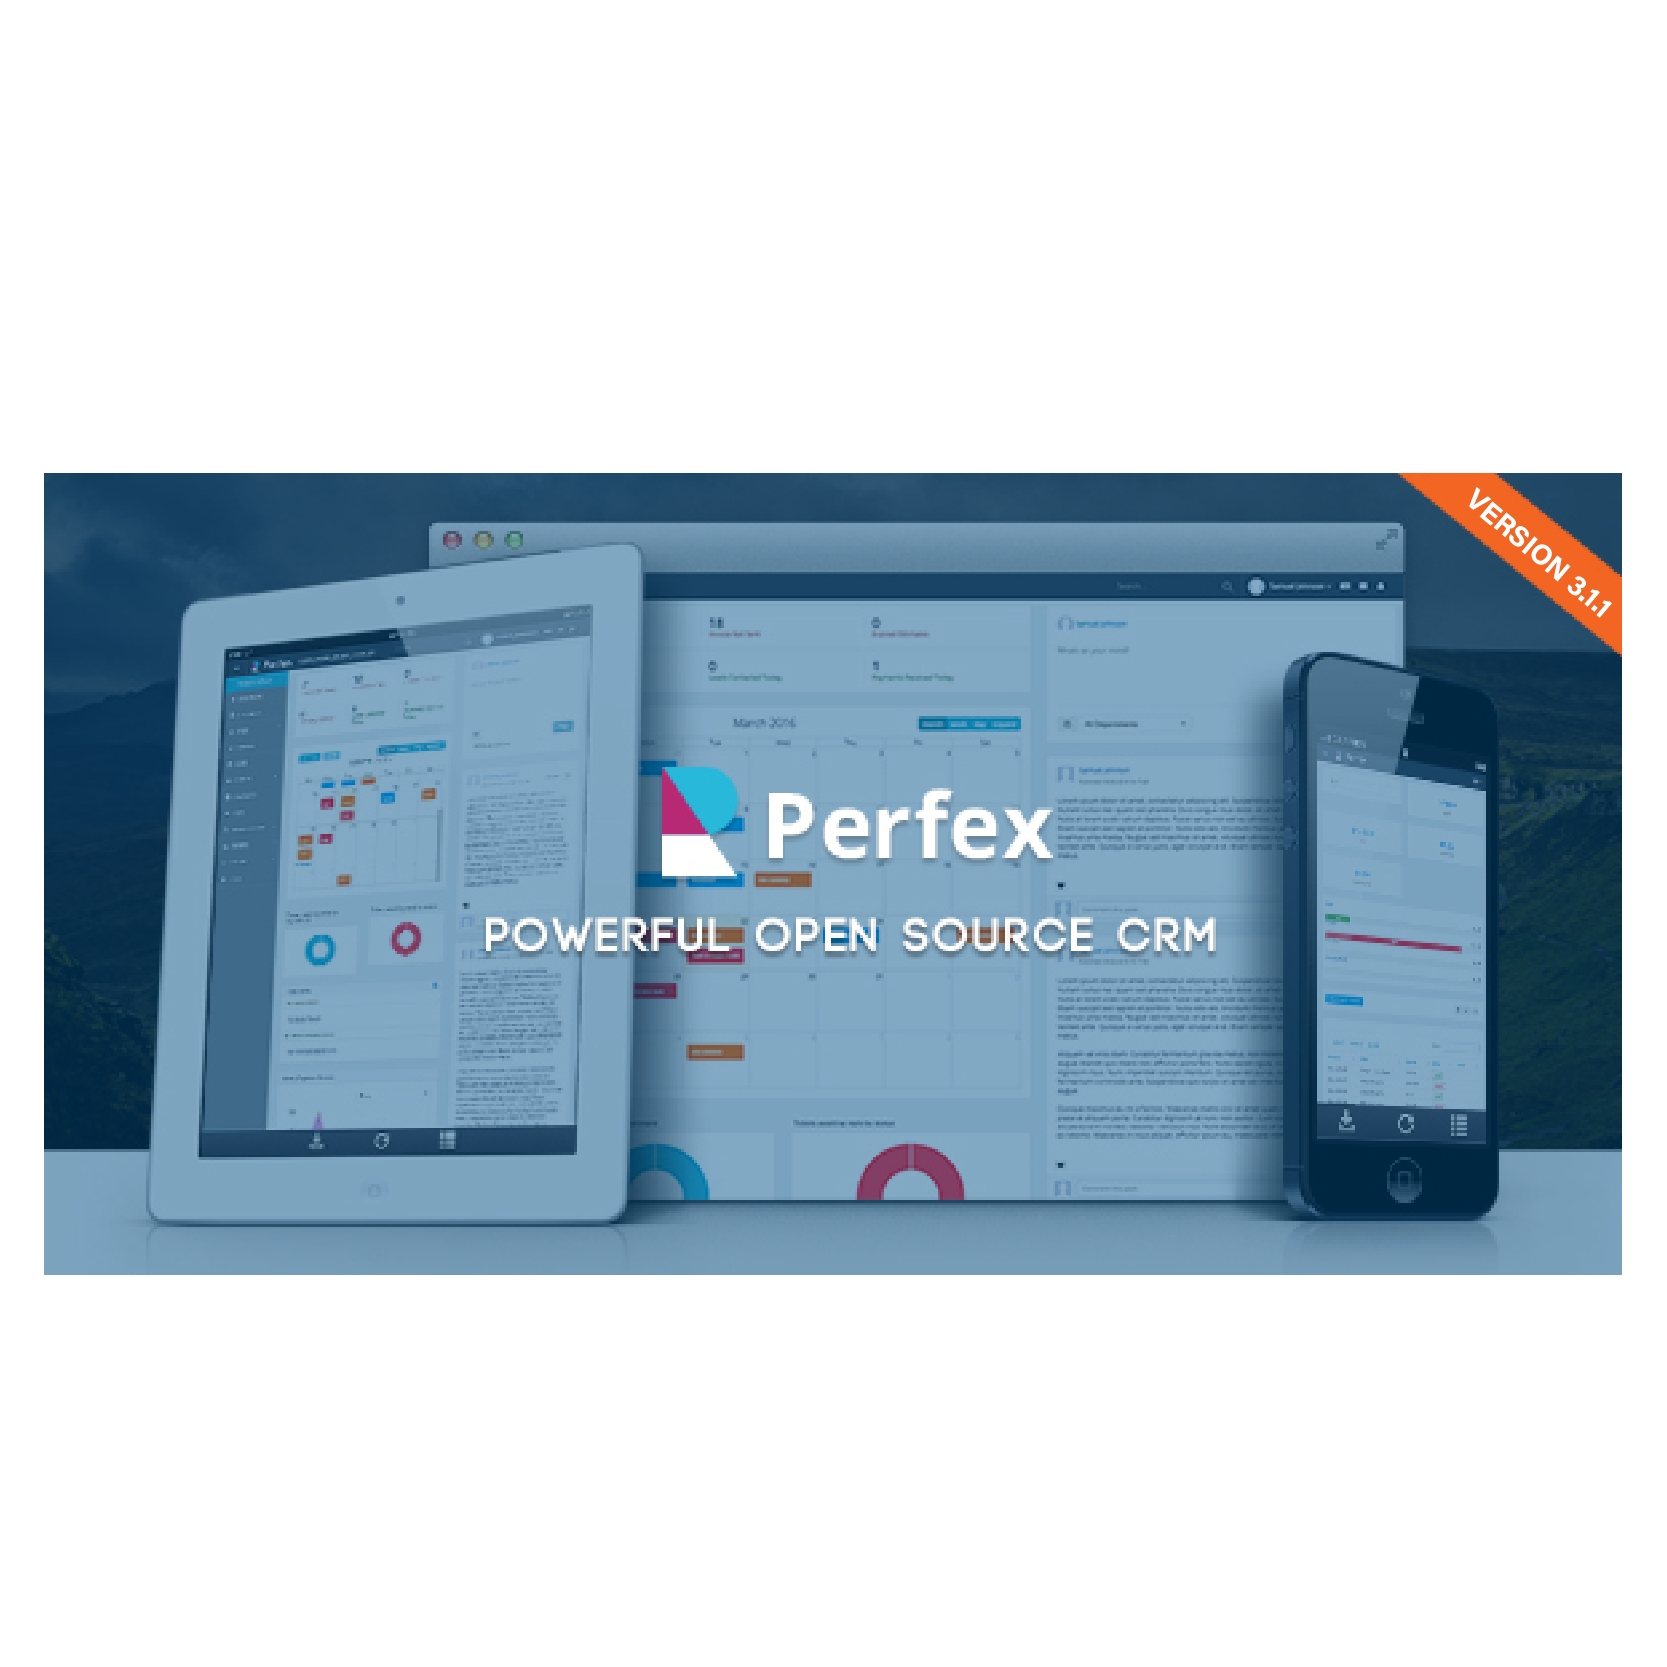 Perfex - 强大的开源 CRM